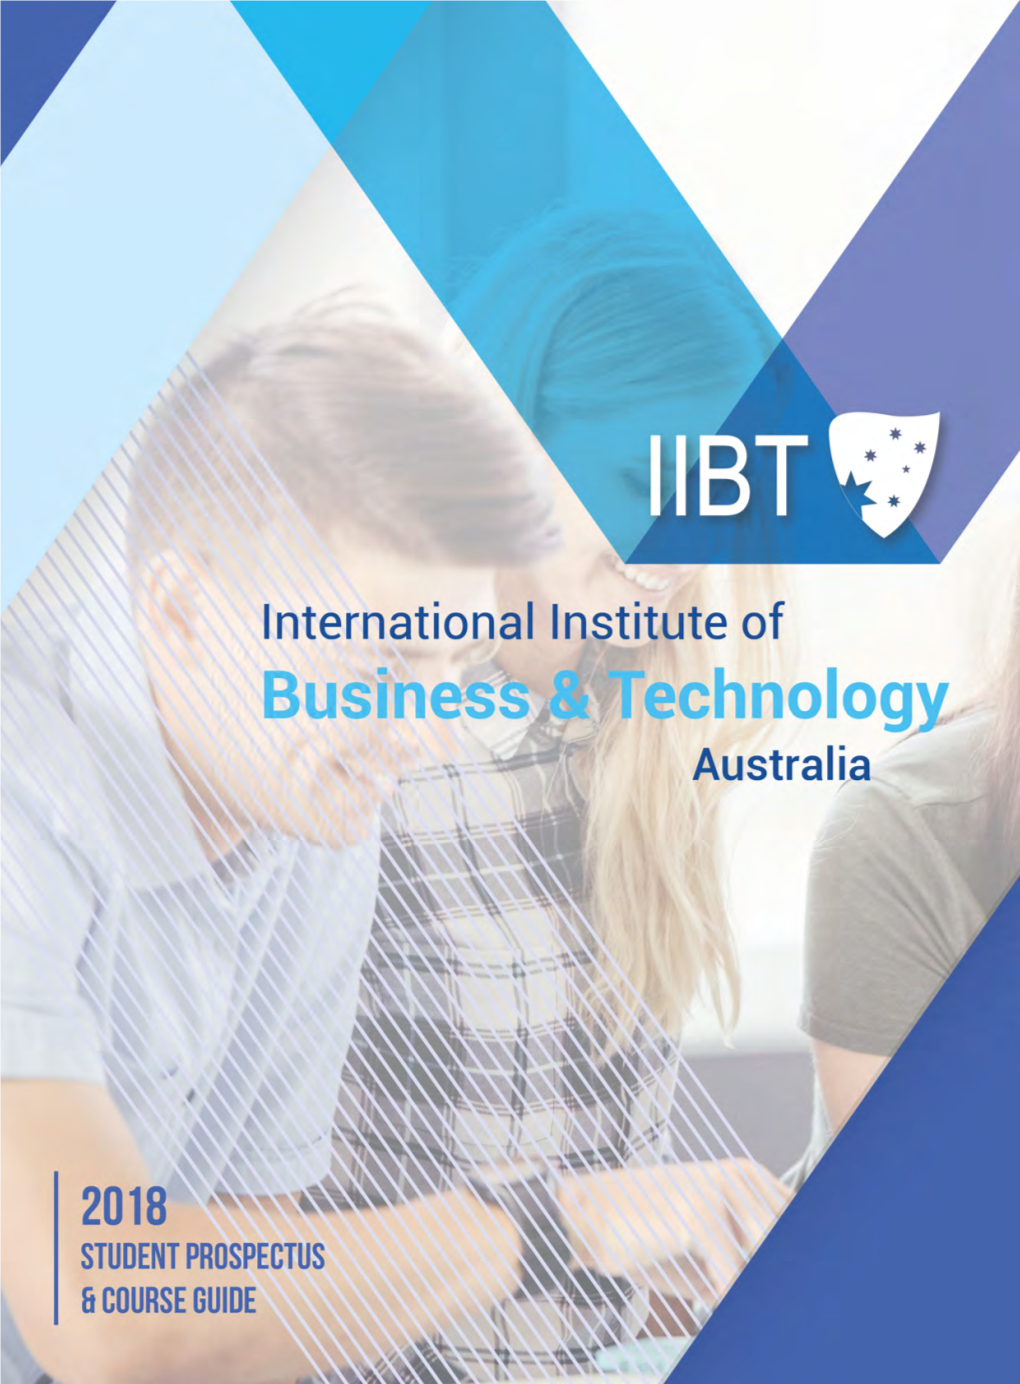 International Institute of Business & Technology